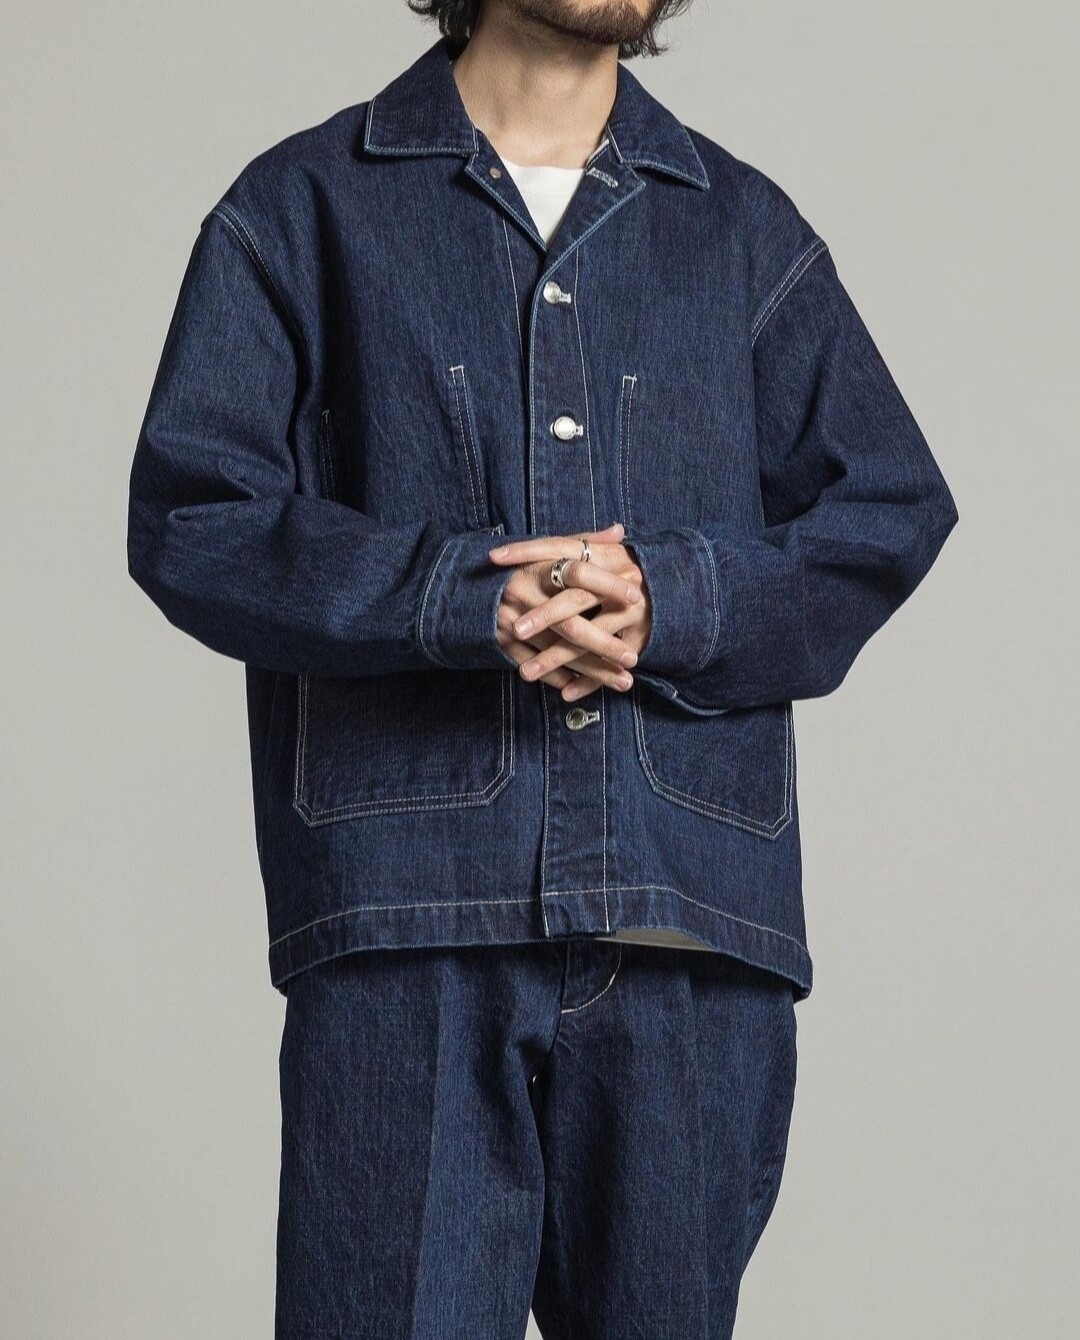 Markaware work jacket japan denim veste jean marque brand